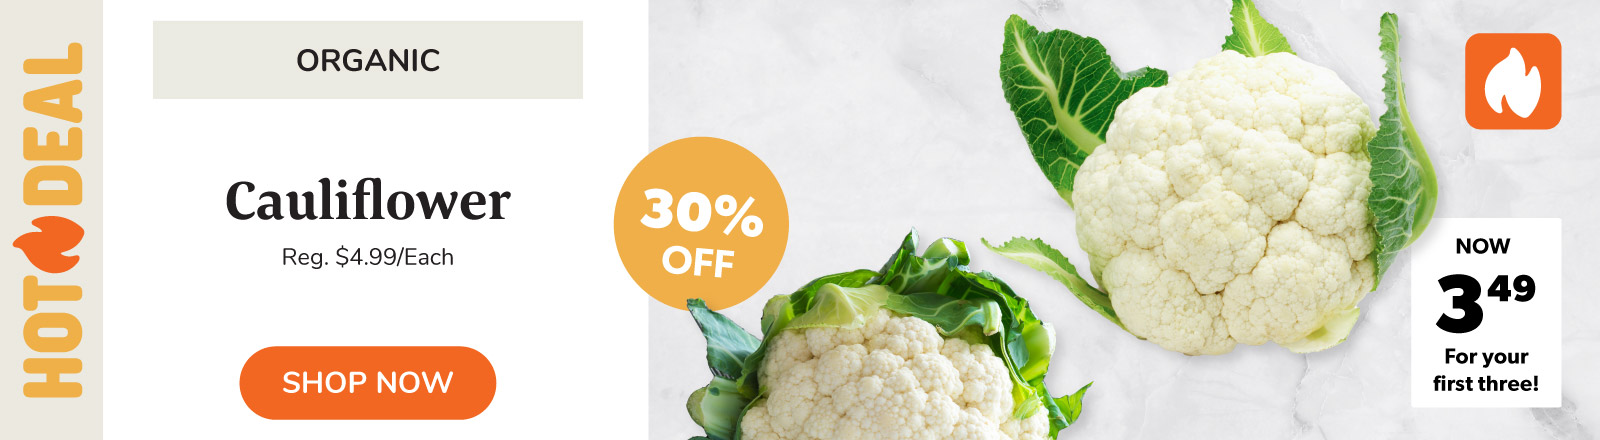 Save on organic cauliflower this week